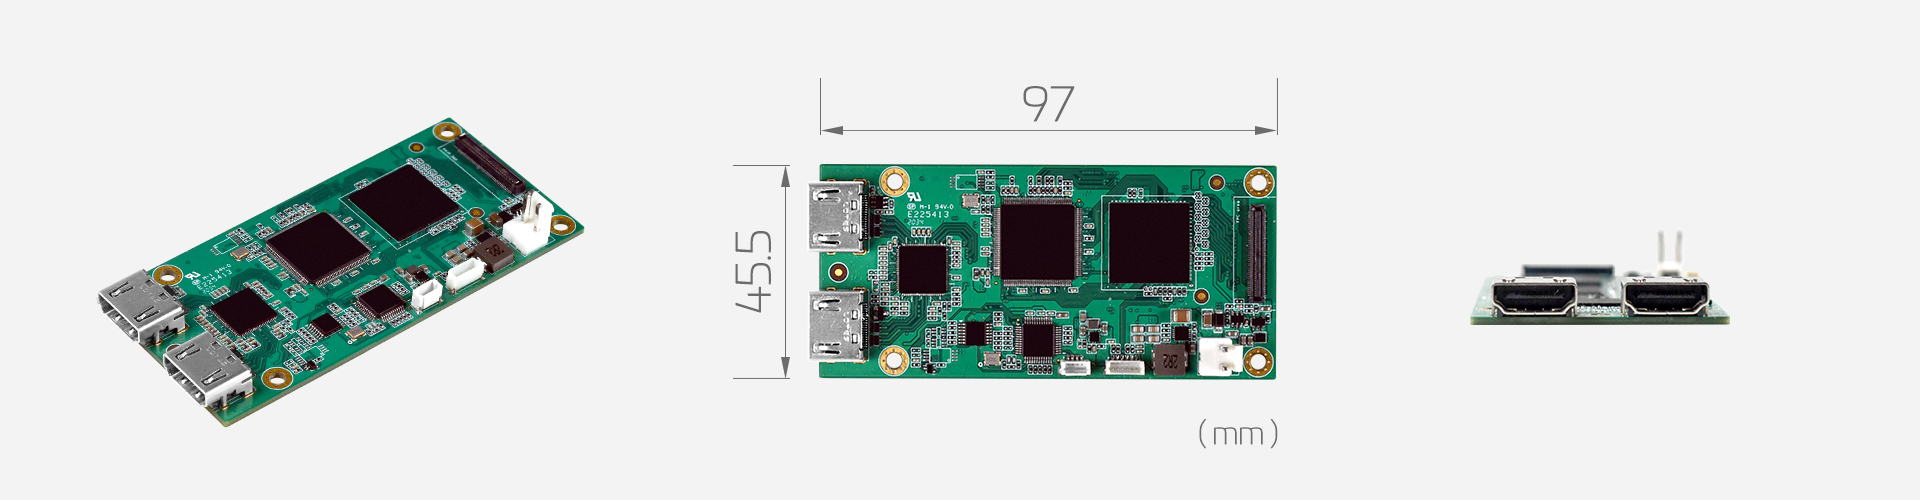 TC740N2 MP HDMI1.4